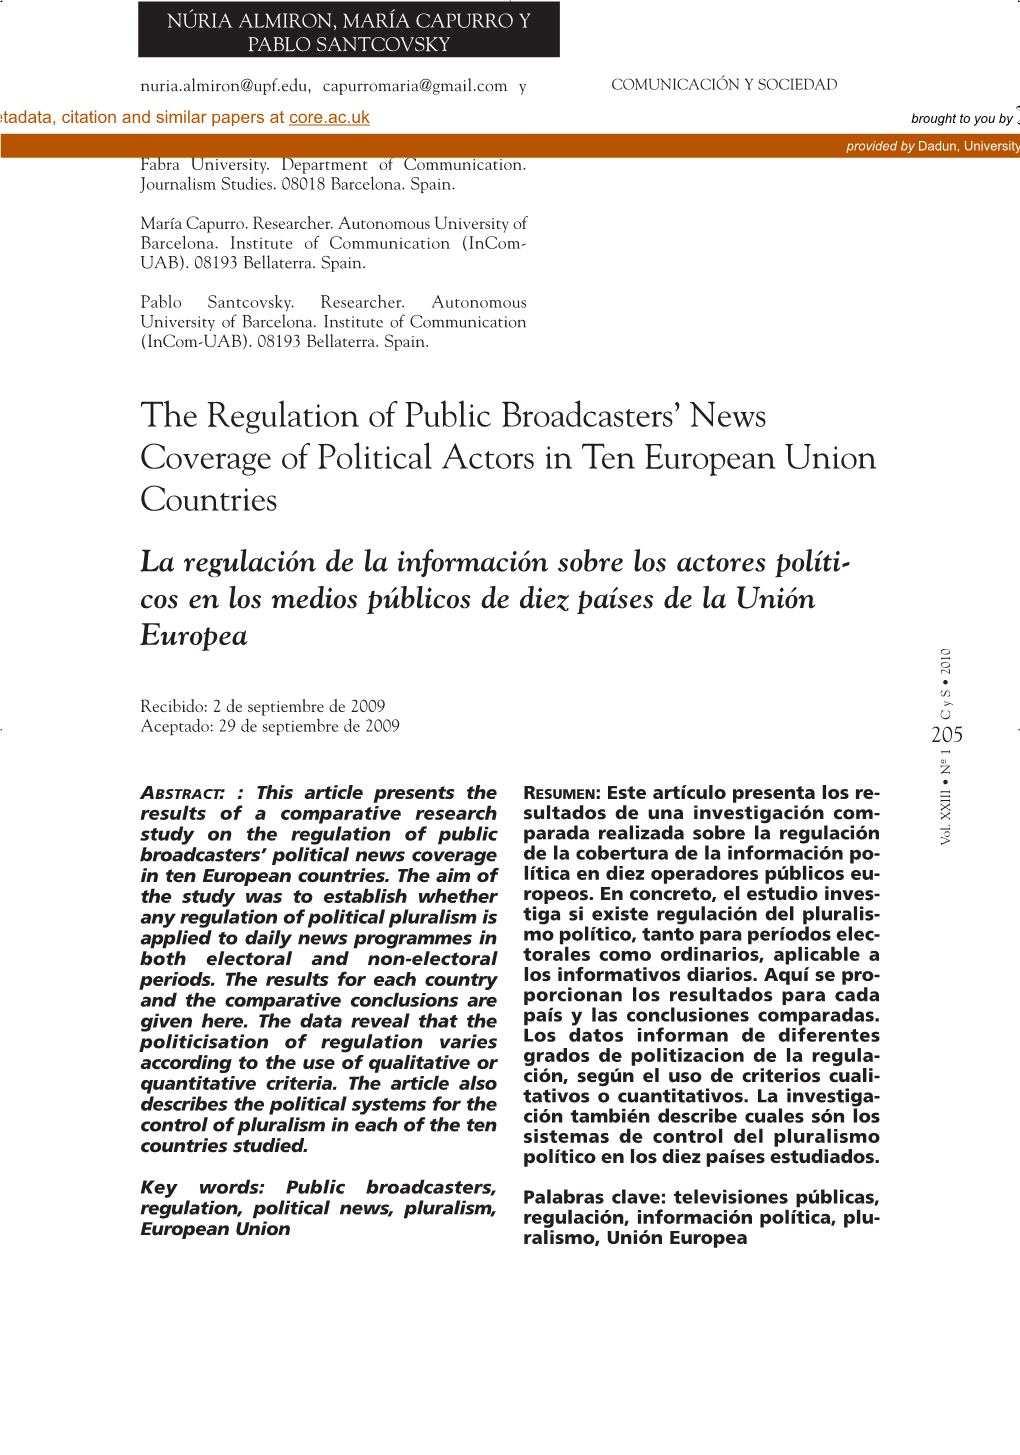 Revista Junio-10.Qxp12/5/1018:56Página205 European Union Regulation, Politicalnews, Pluralism, Key Words: Publicbroadcasters, Countries Studied